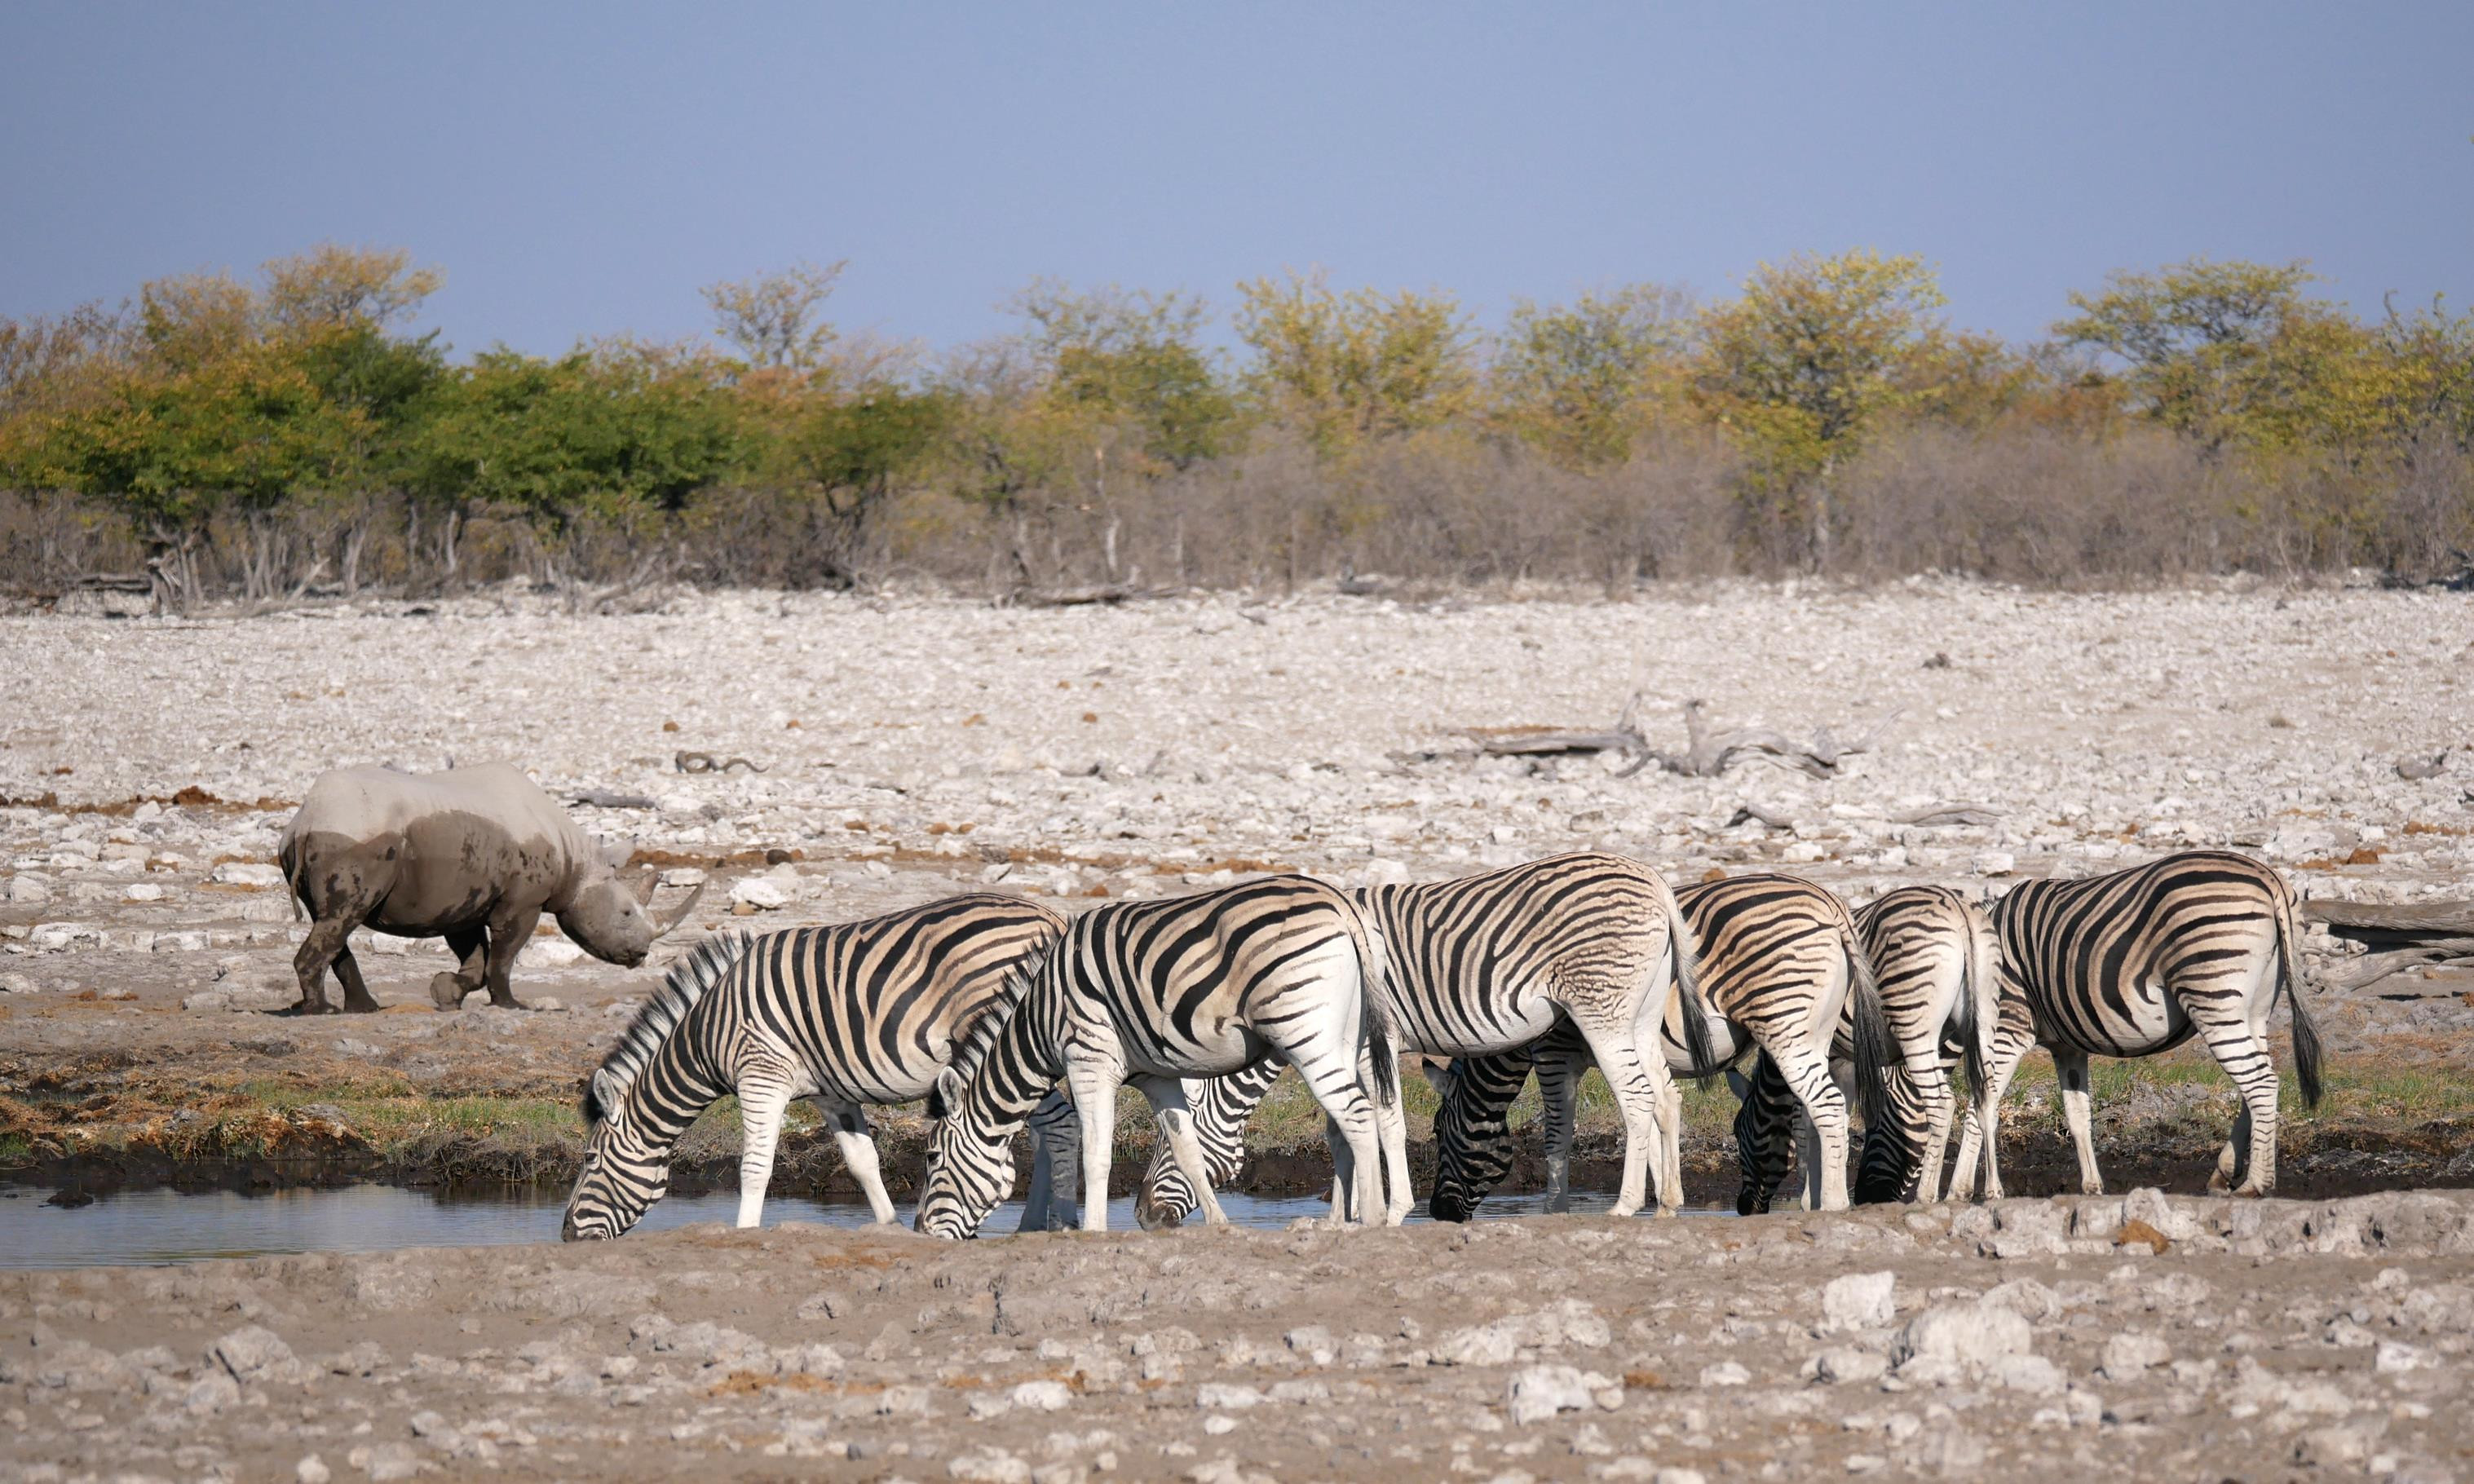 Zebras, giraffes and elephants were far more common than rhinos